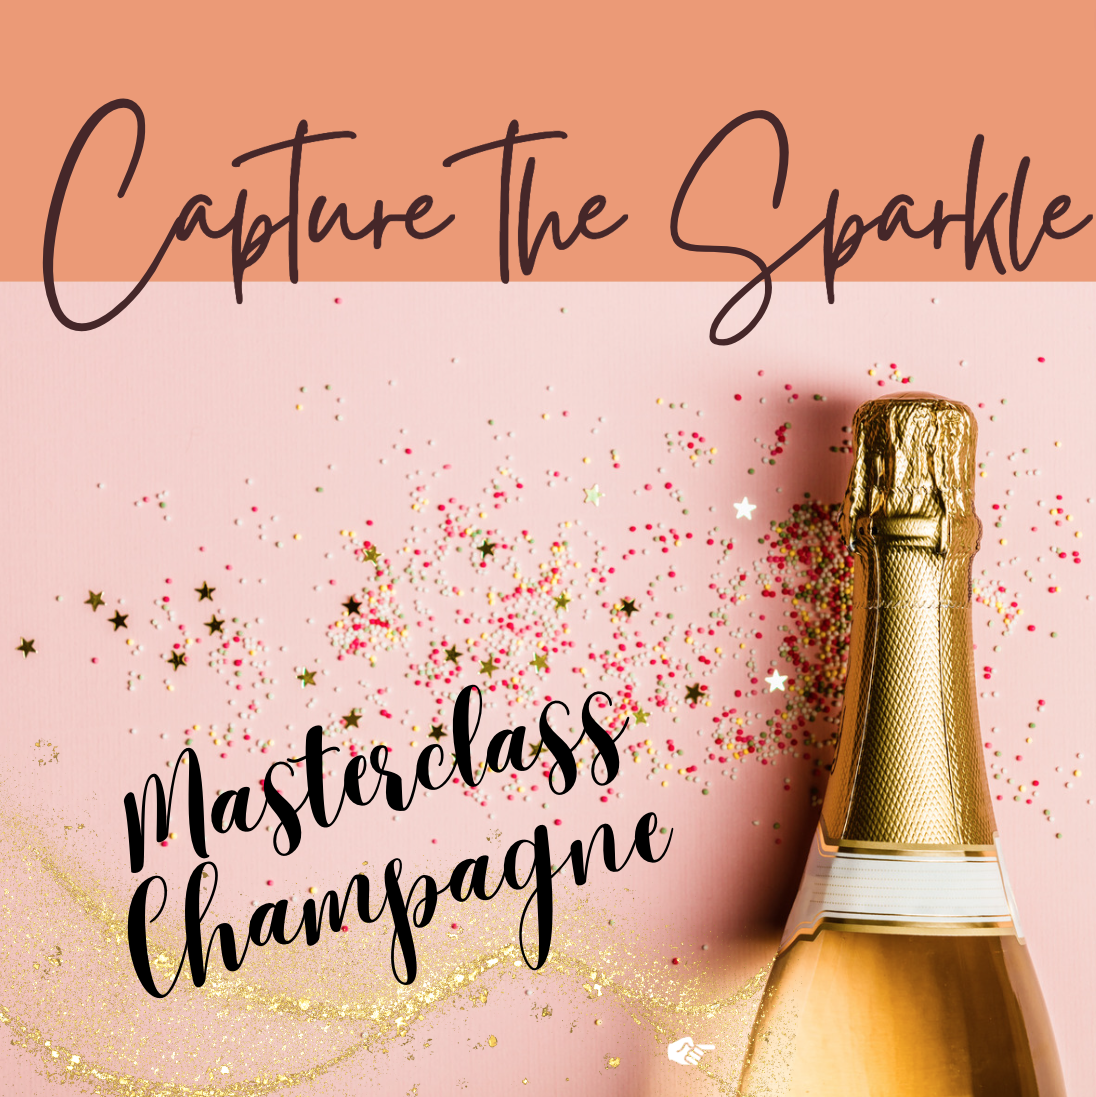 Masterclass Champagne - Capture the Sparkle